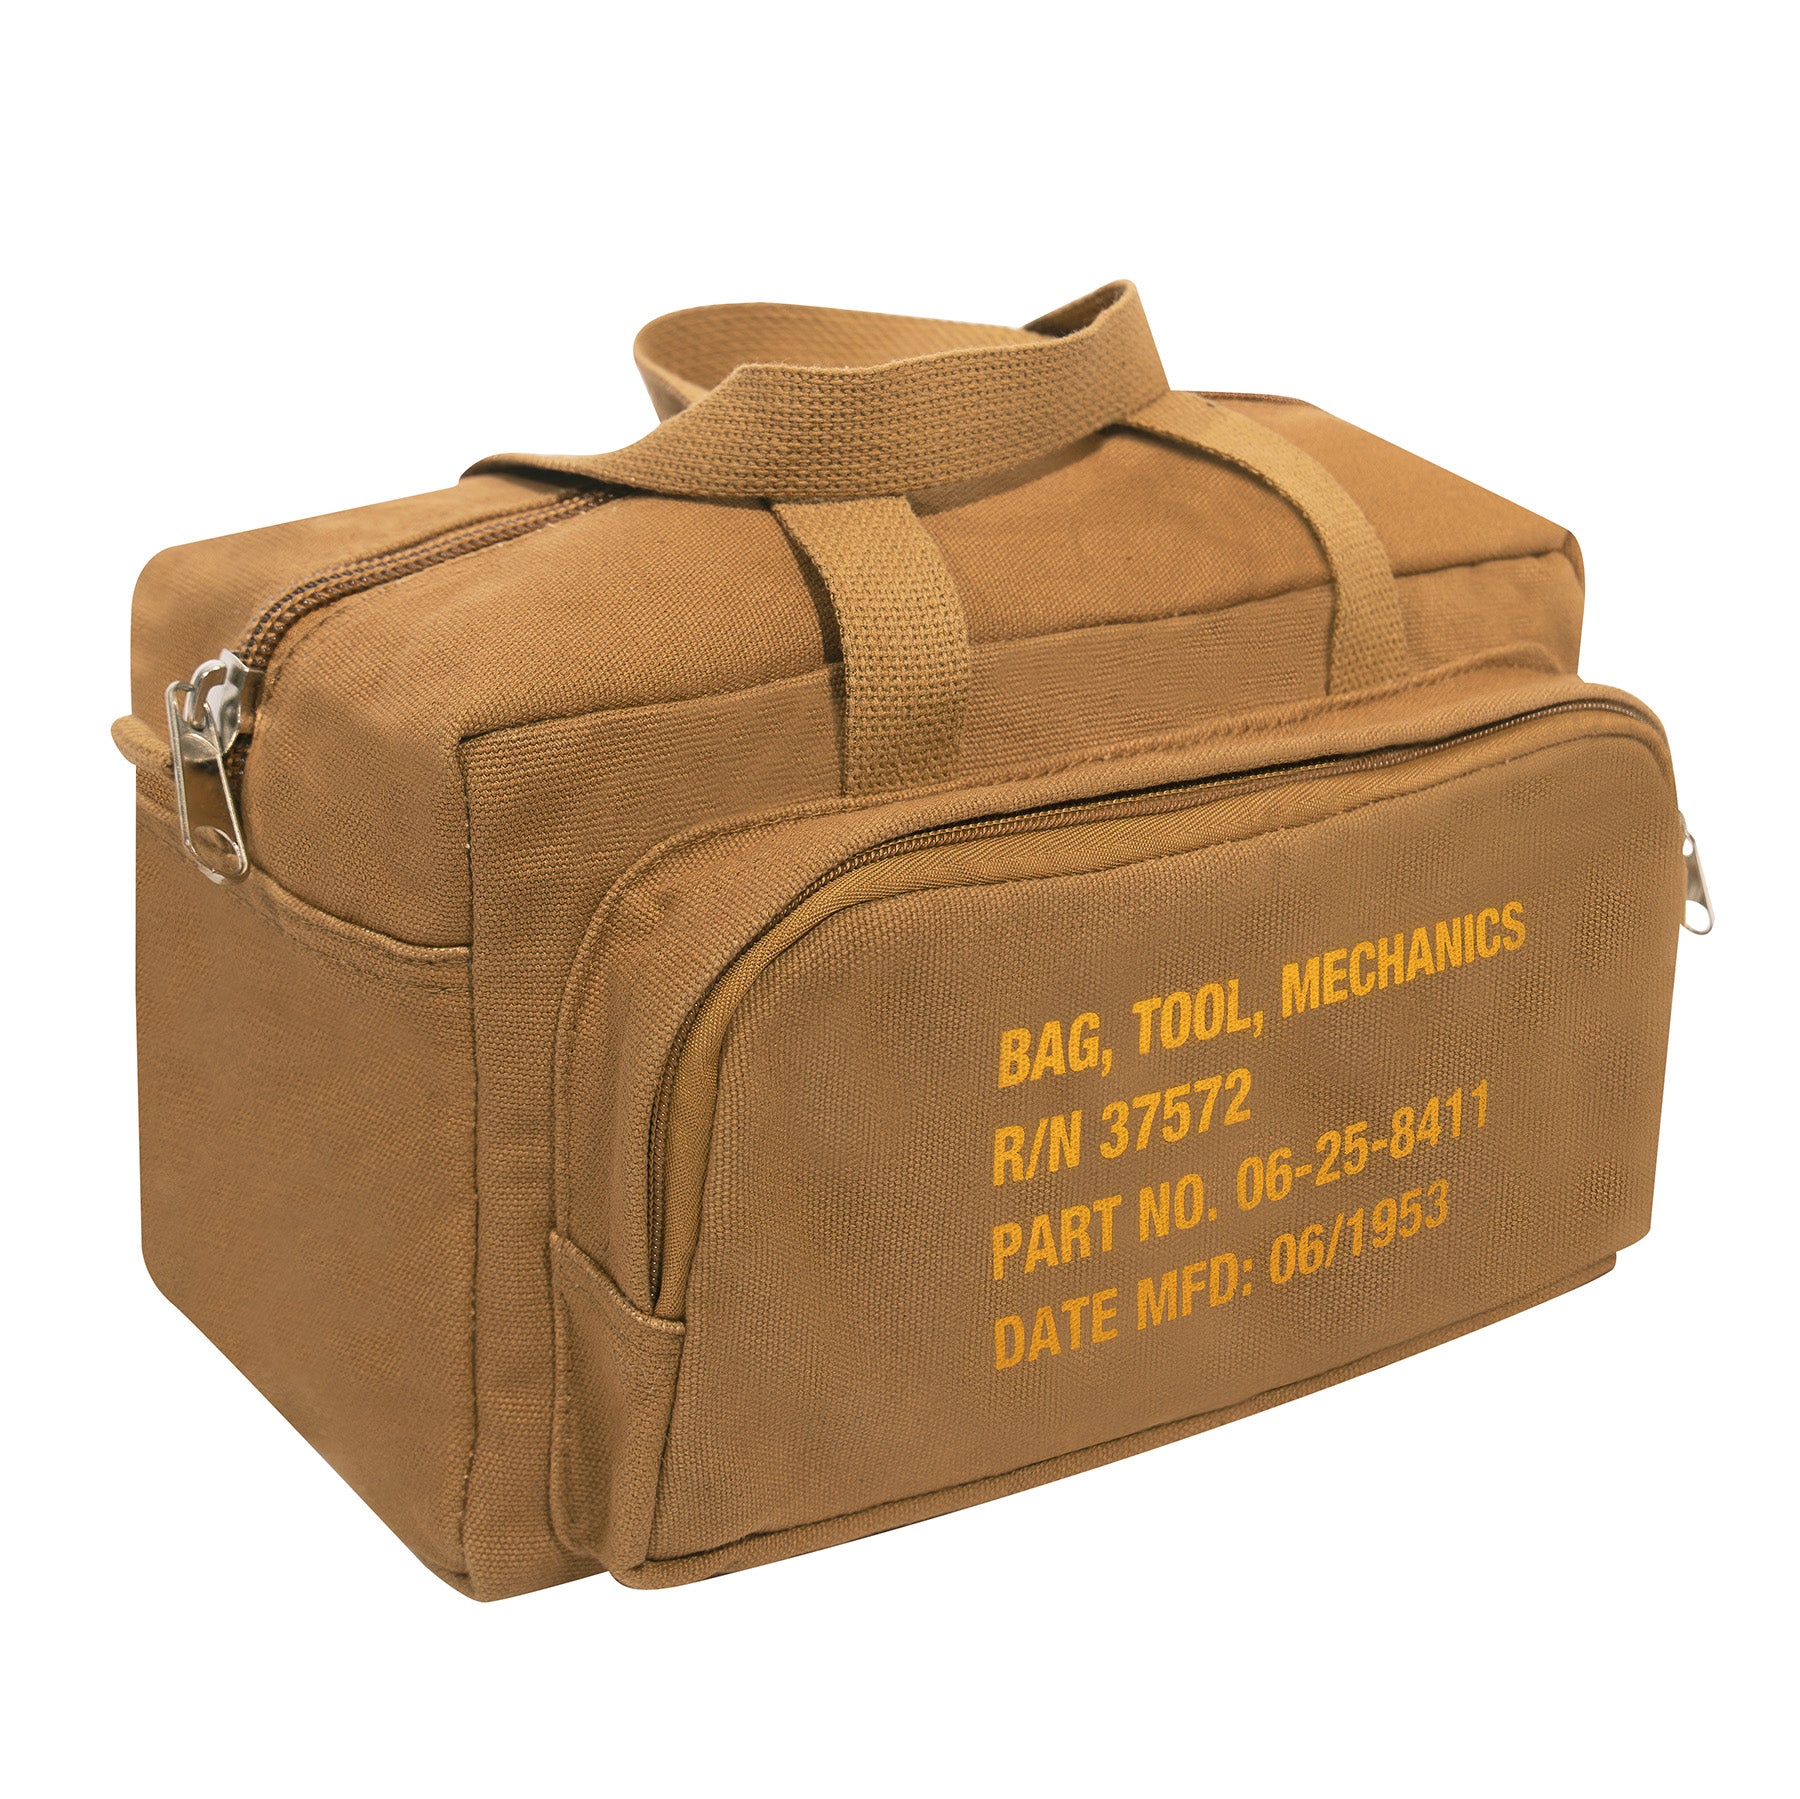 Milspec G.I. Type Zipper Pocket Mechanics Tool Bag With Military Stencil New Arrivals MilTac Tactical Military Outdoor Gear Australia